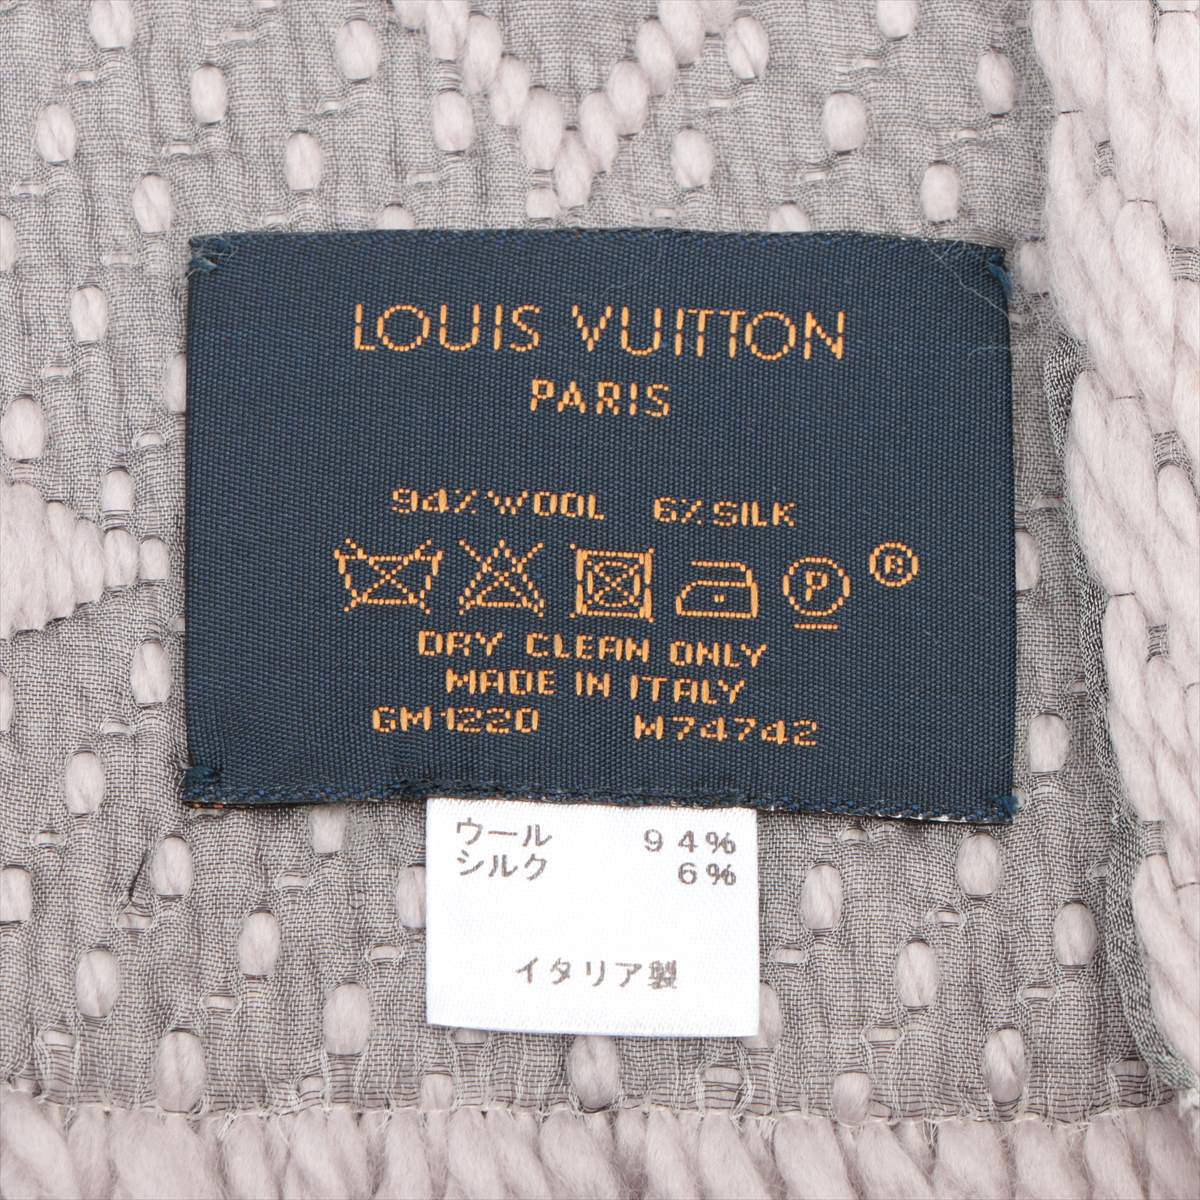 Logomania wool scarf Louis Vuitton Black in Wool - 29112788